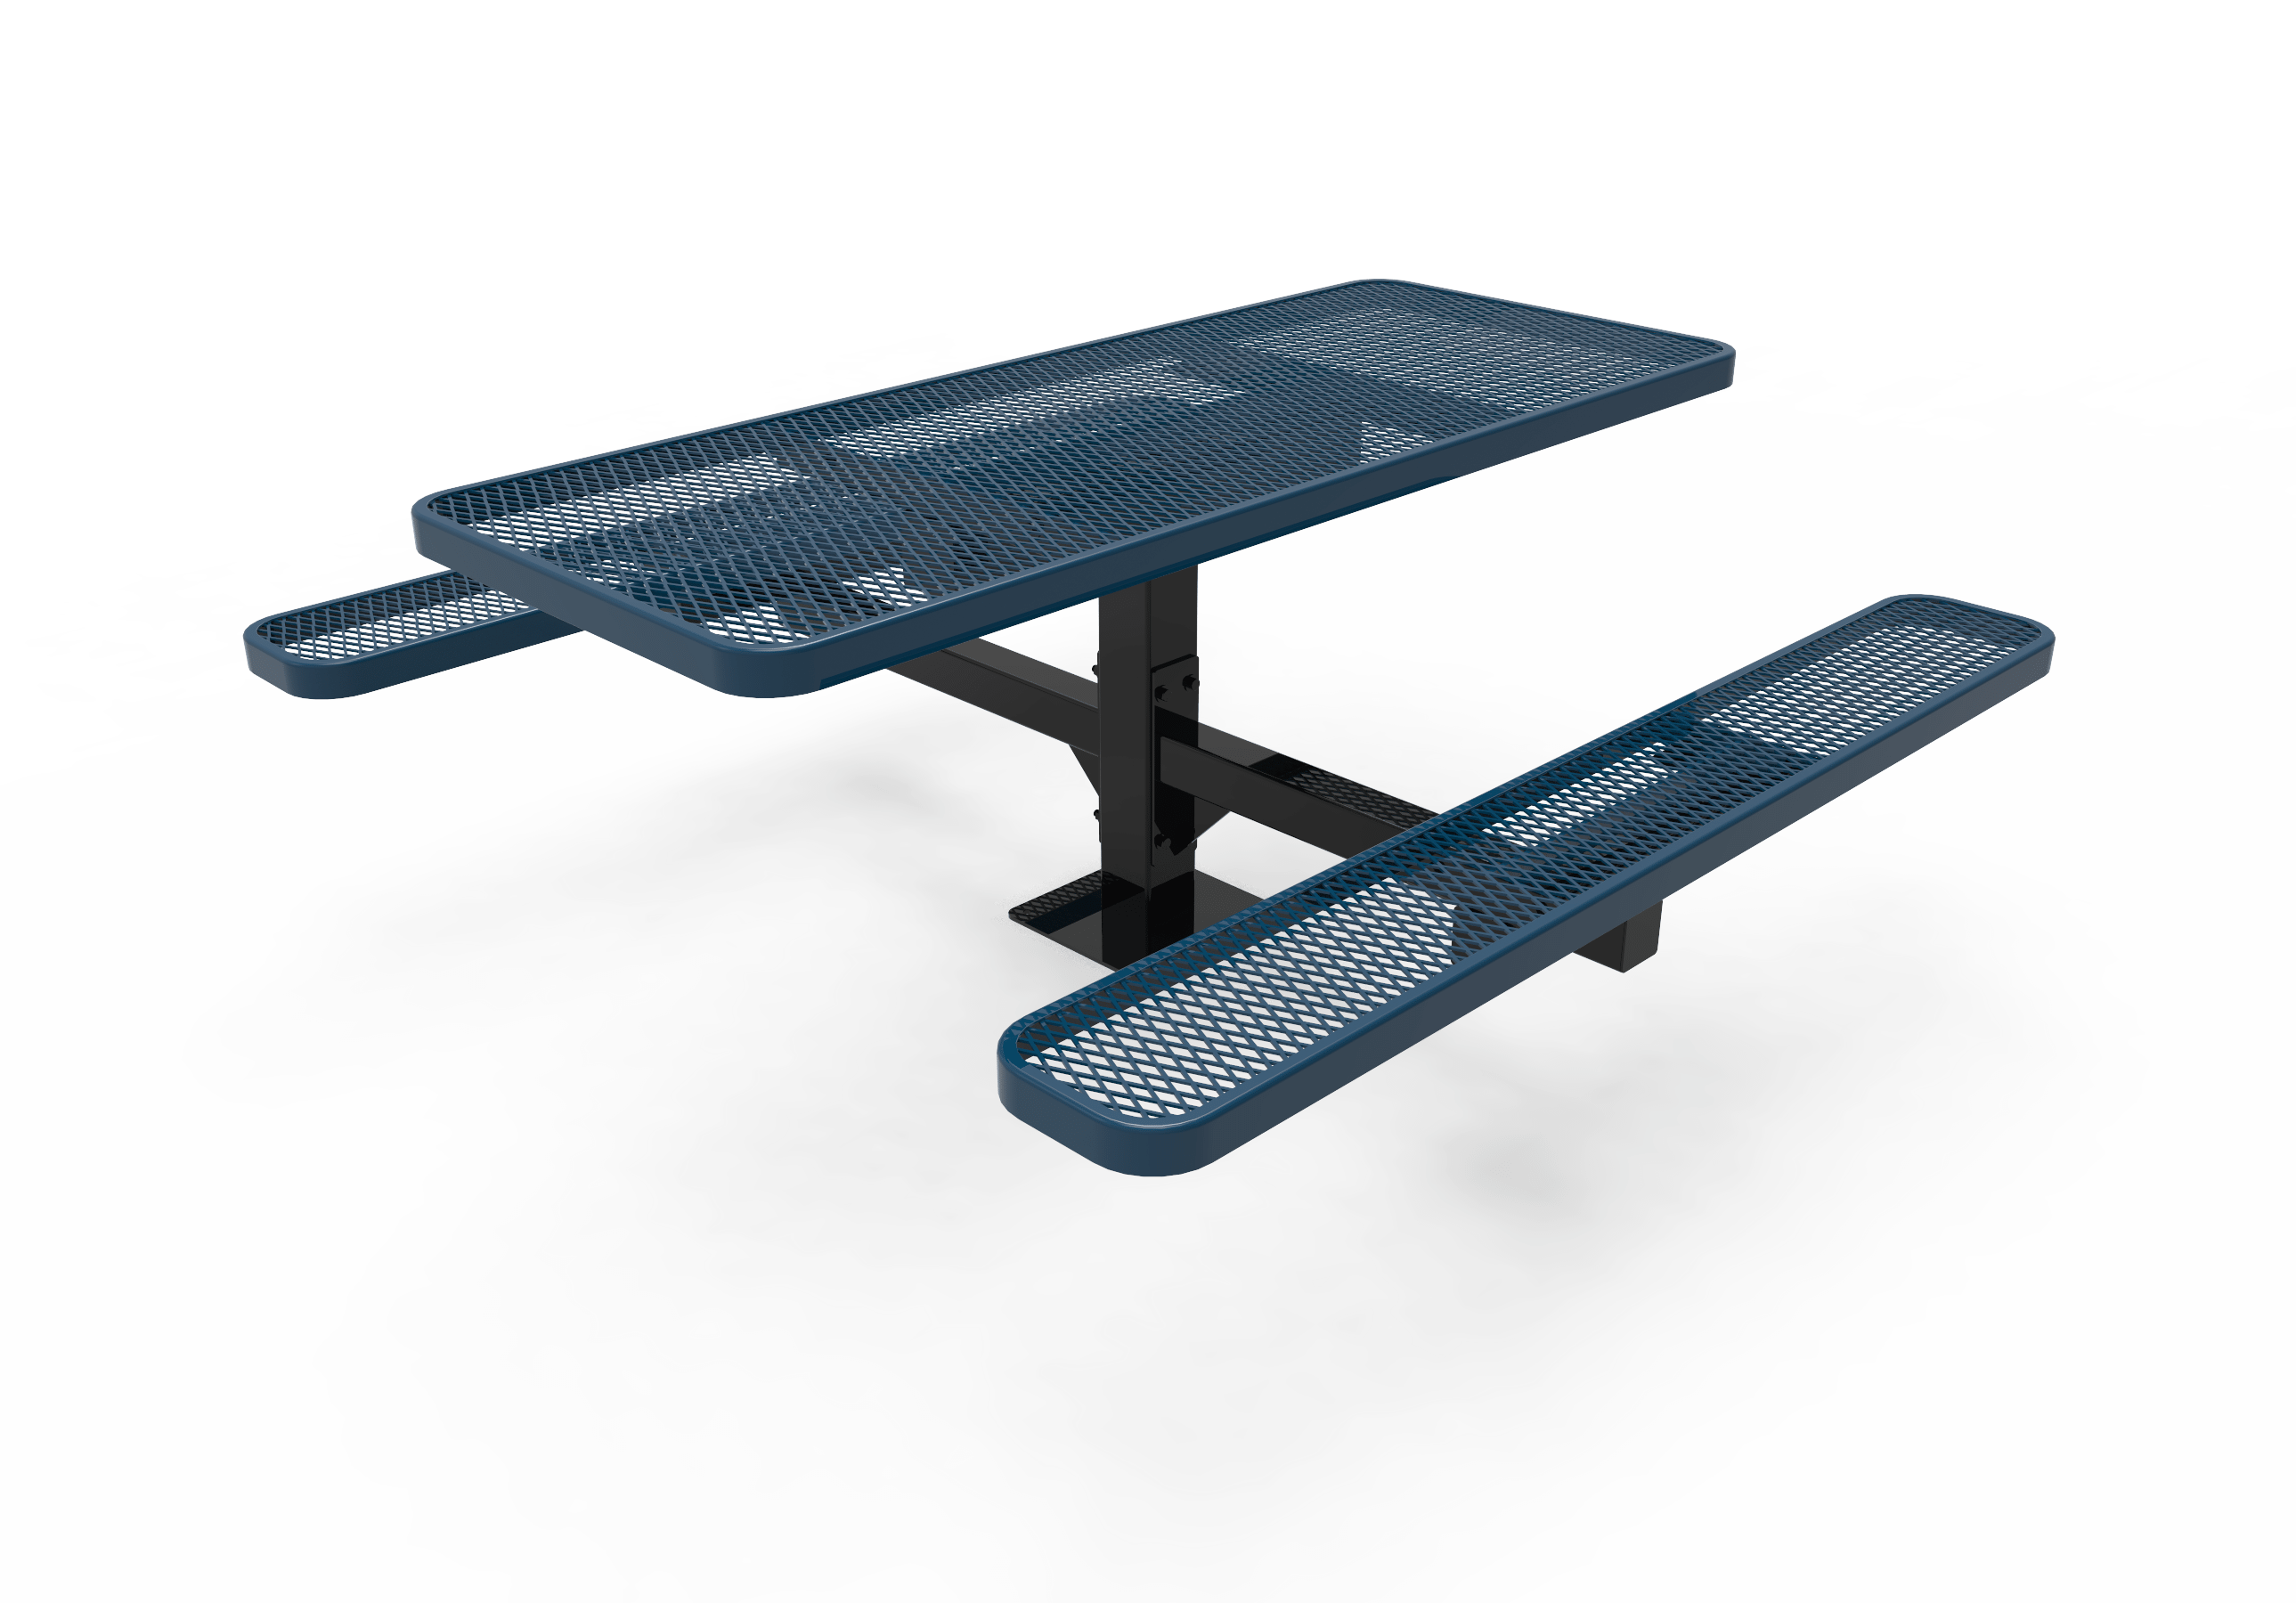 6′ Single Pedestal Picnic Table Surface-Mesh
TRT06-C-07-000
Industry Standard Finish
$1189.00
TRT06-A-07-000
Advantage Premium Finish
$1489.00
